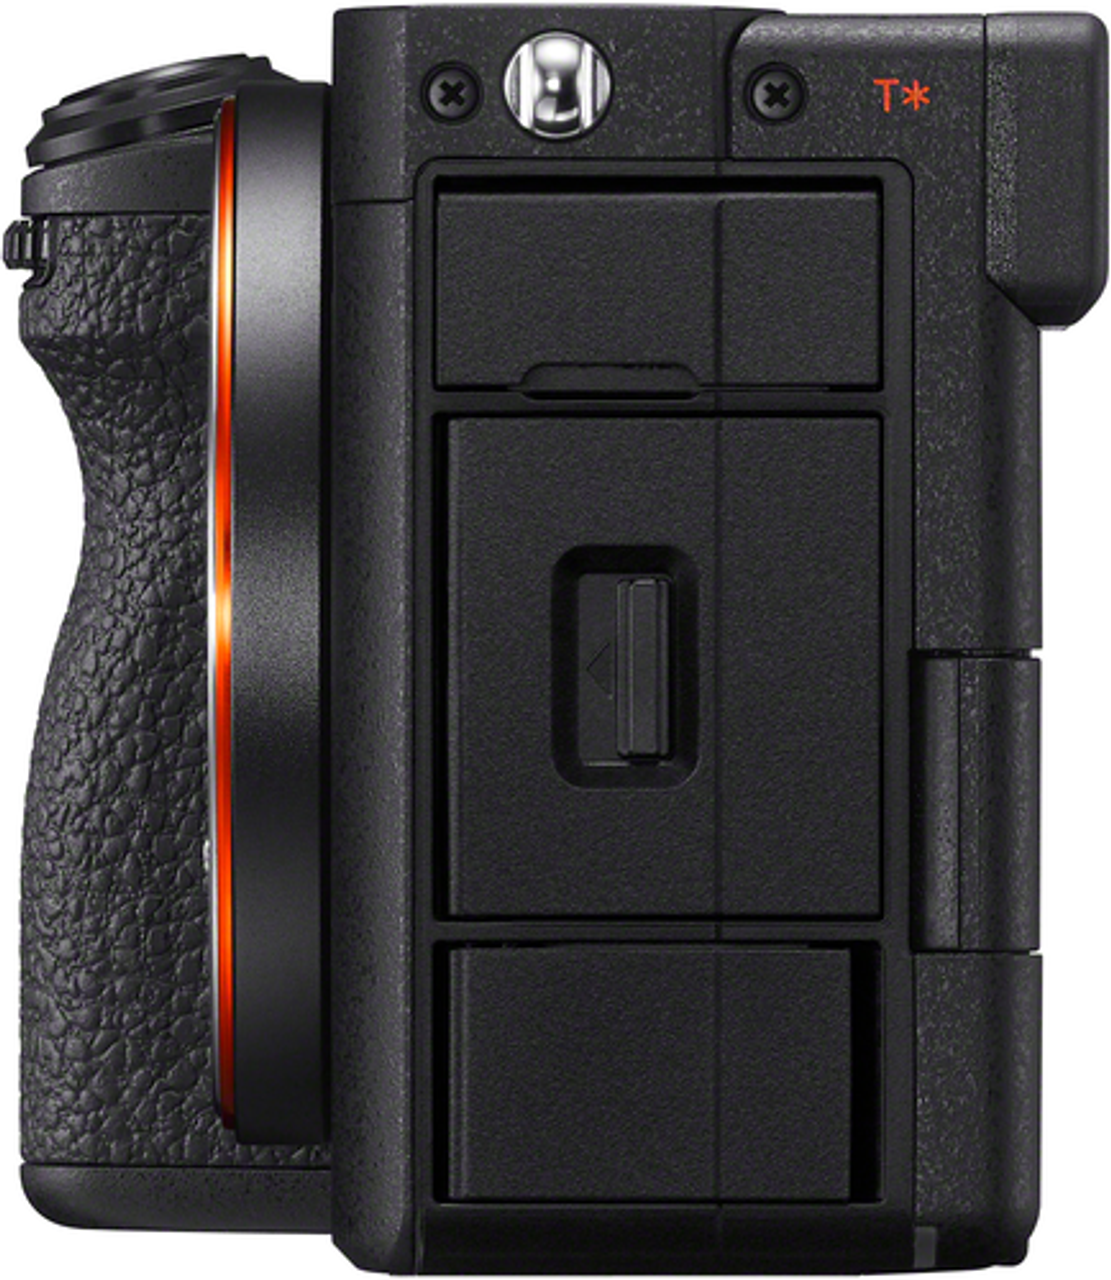 Sony - Alpha 7C II Full frame Mirrorless Interchangeable Lens Camera (Body Only) - Black